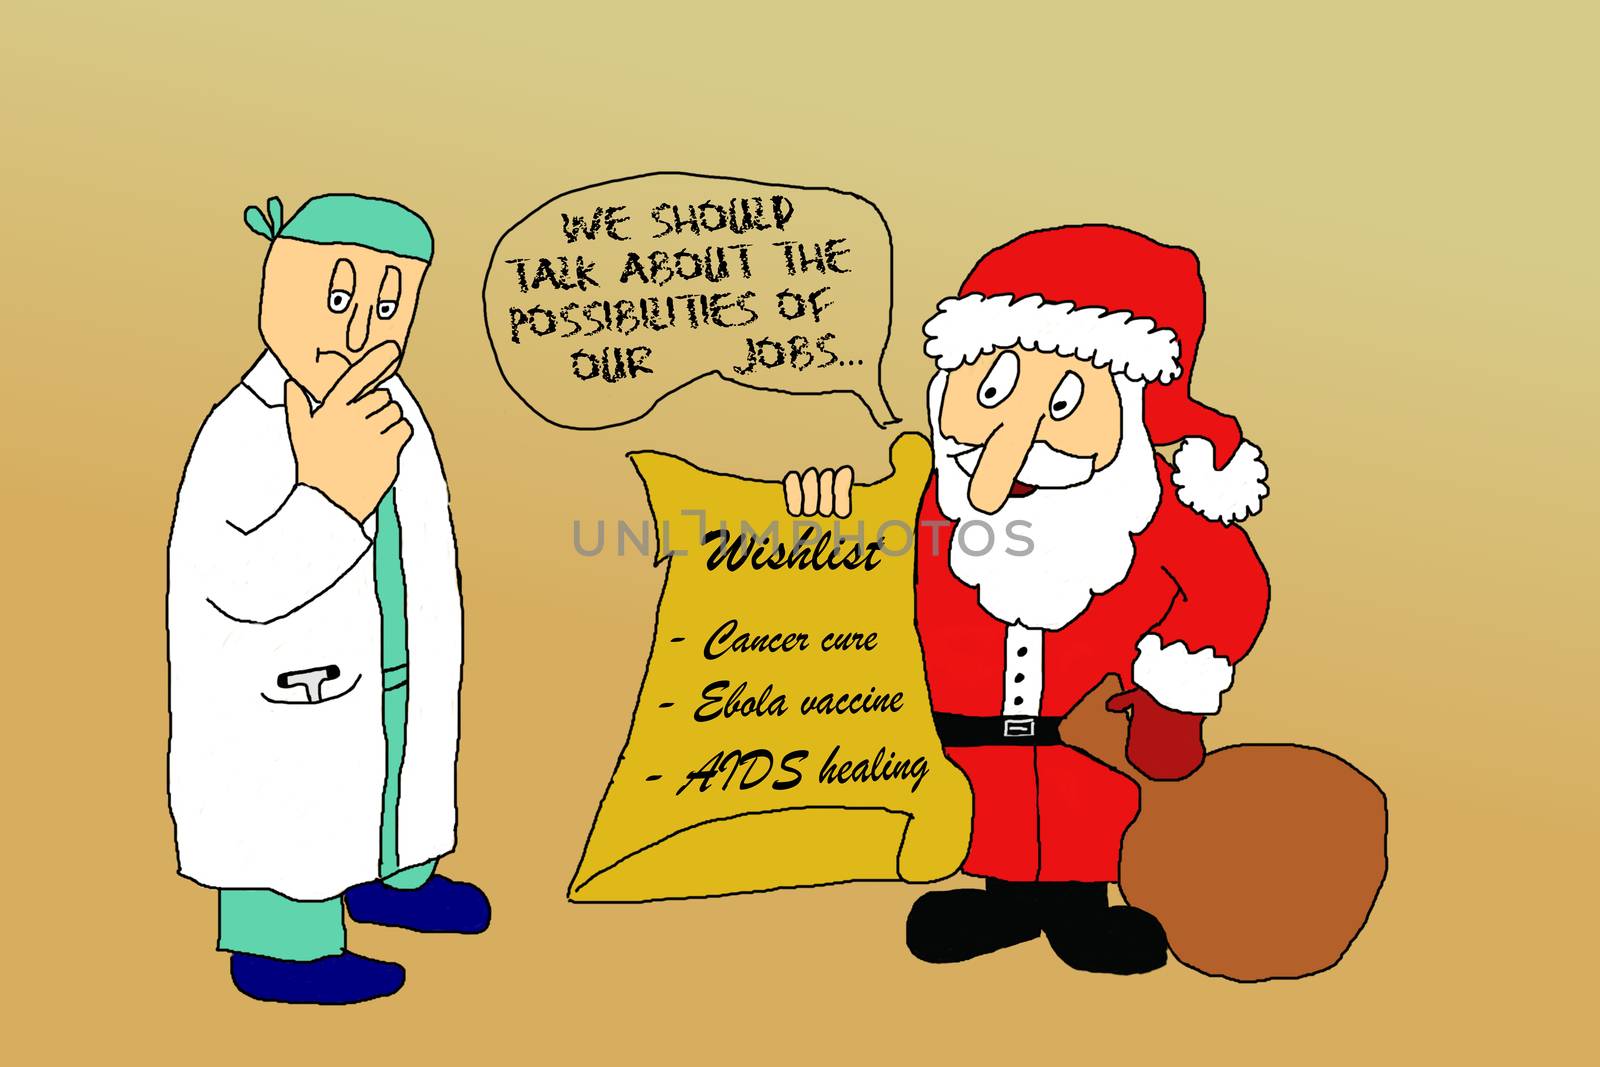 Doctors wishlist for Christmas